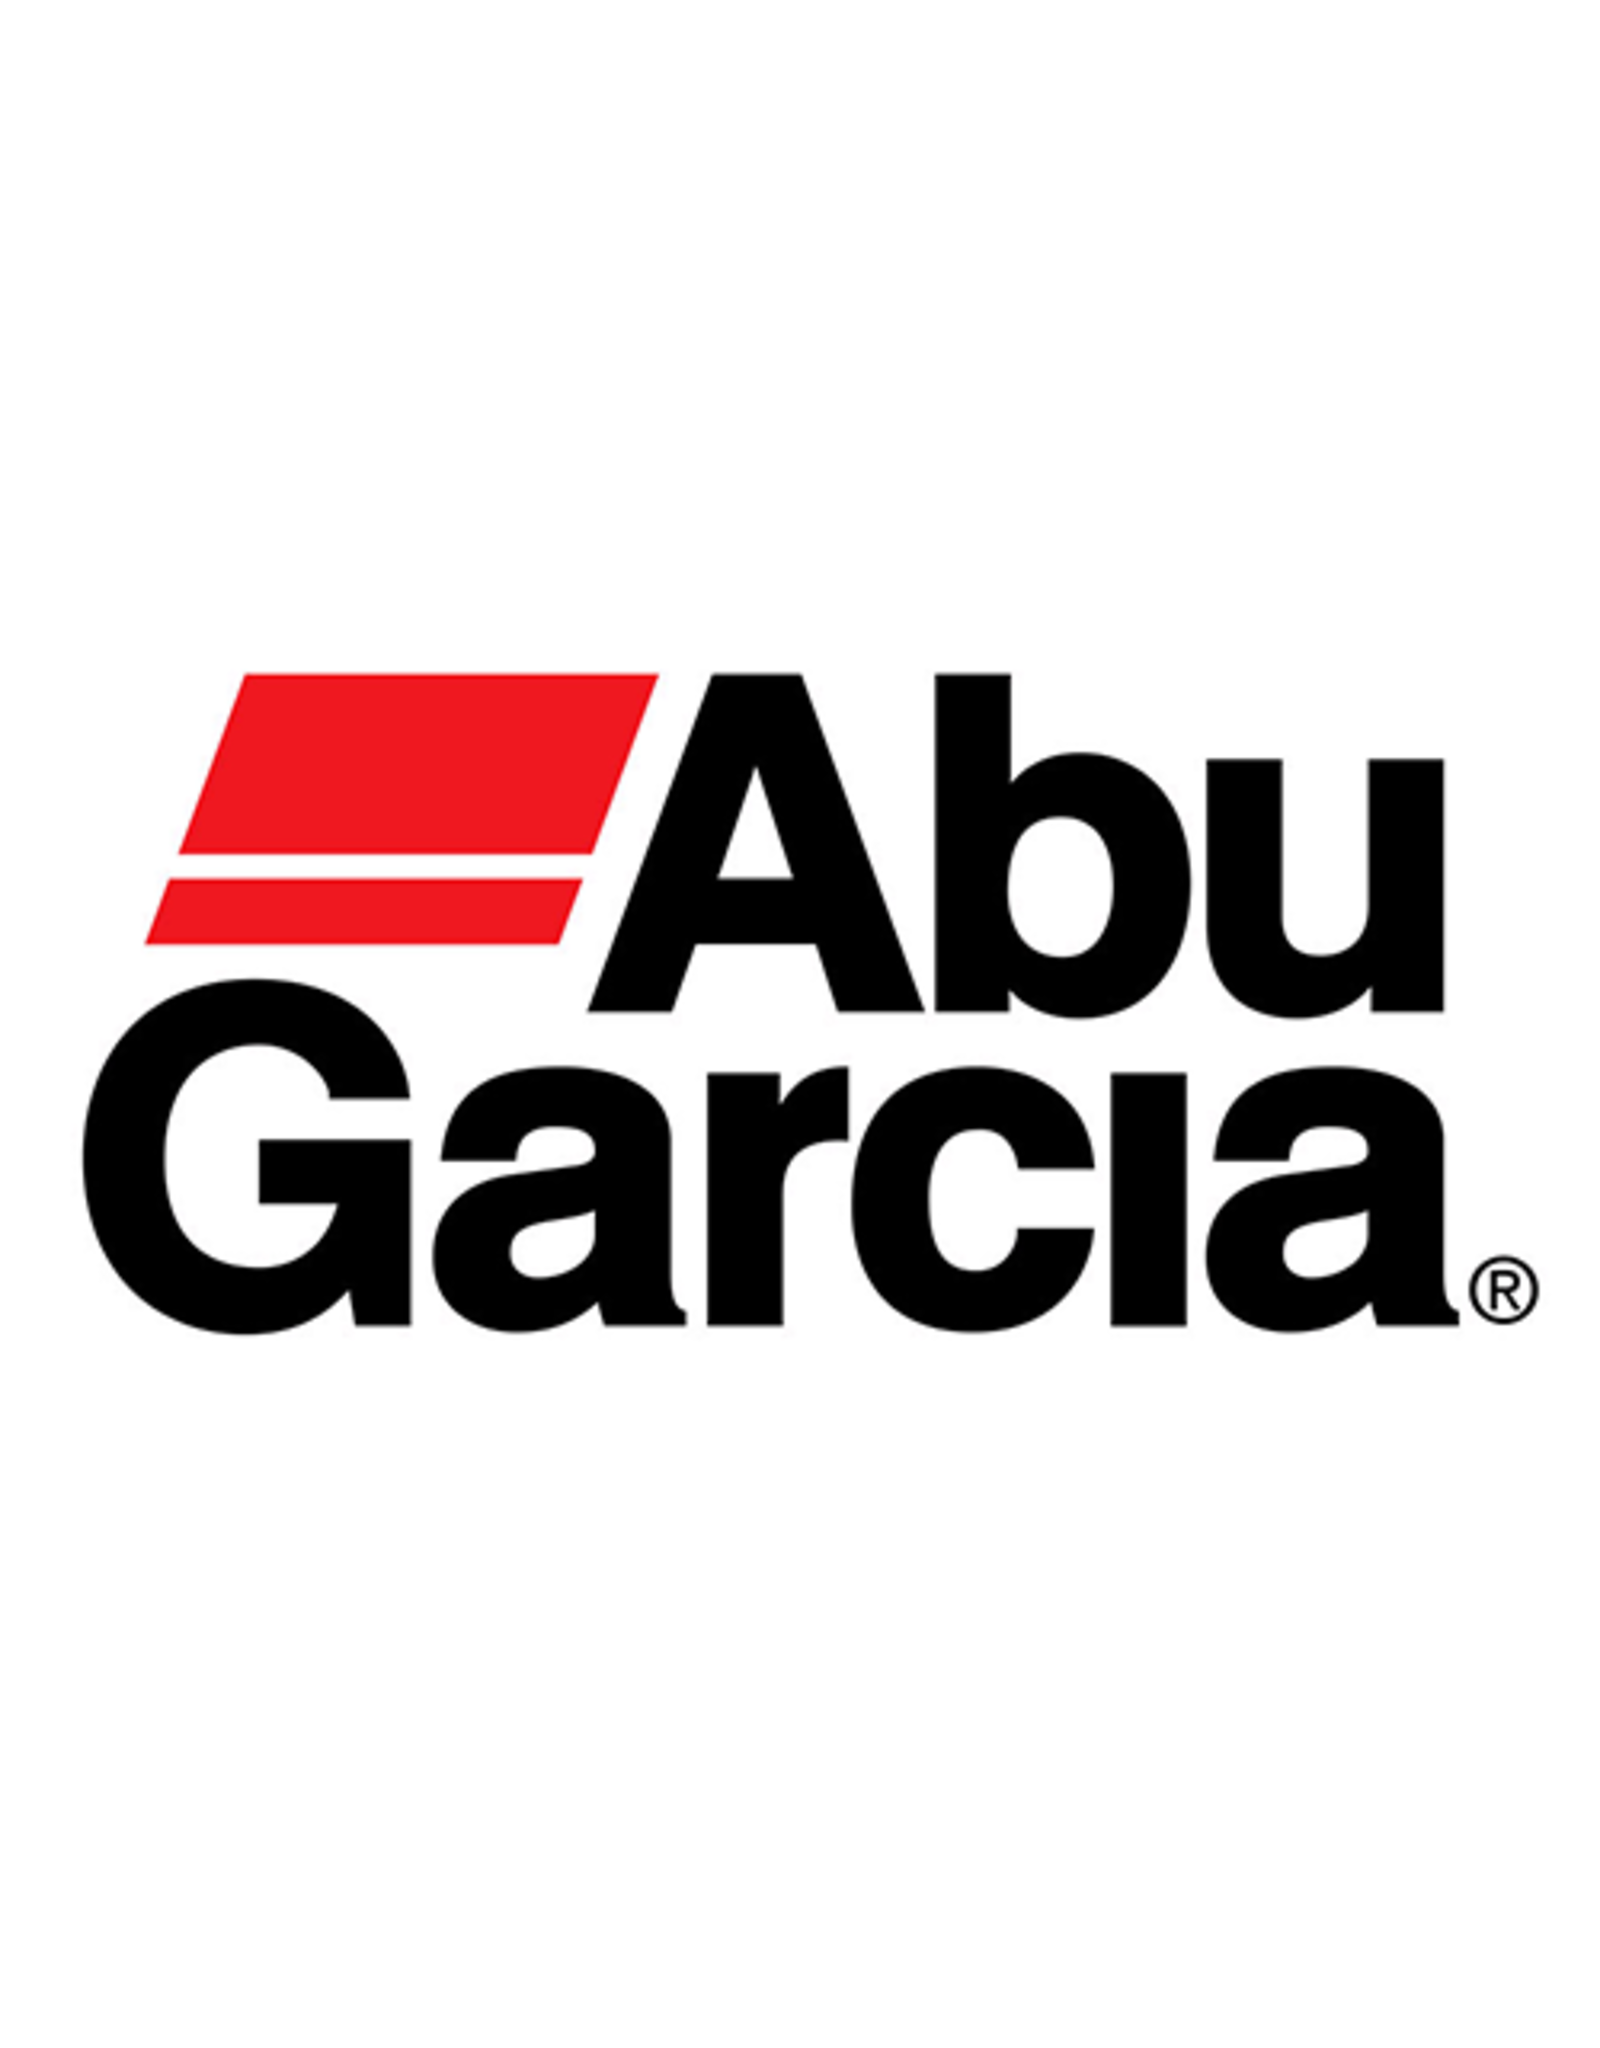 Abu Garcia 13100  BUSHING